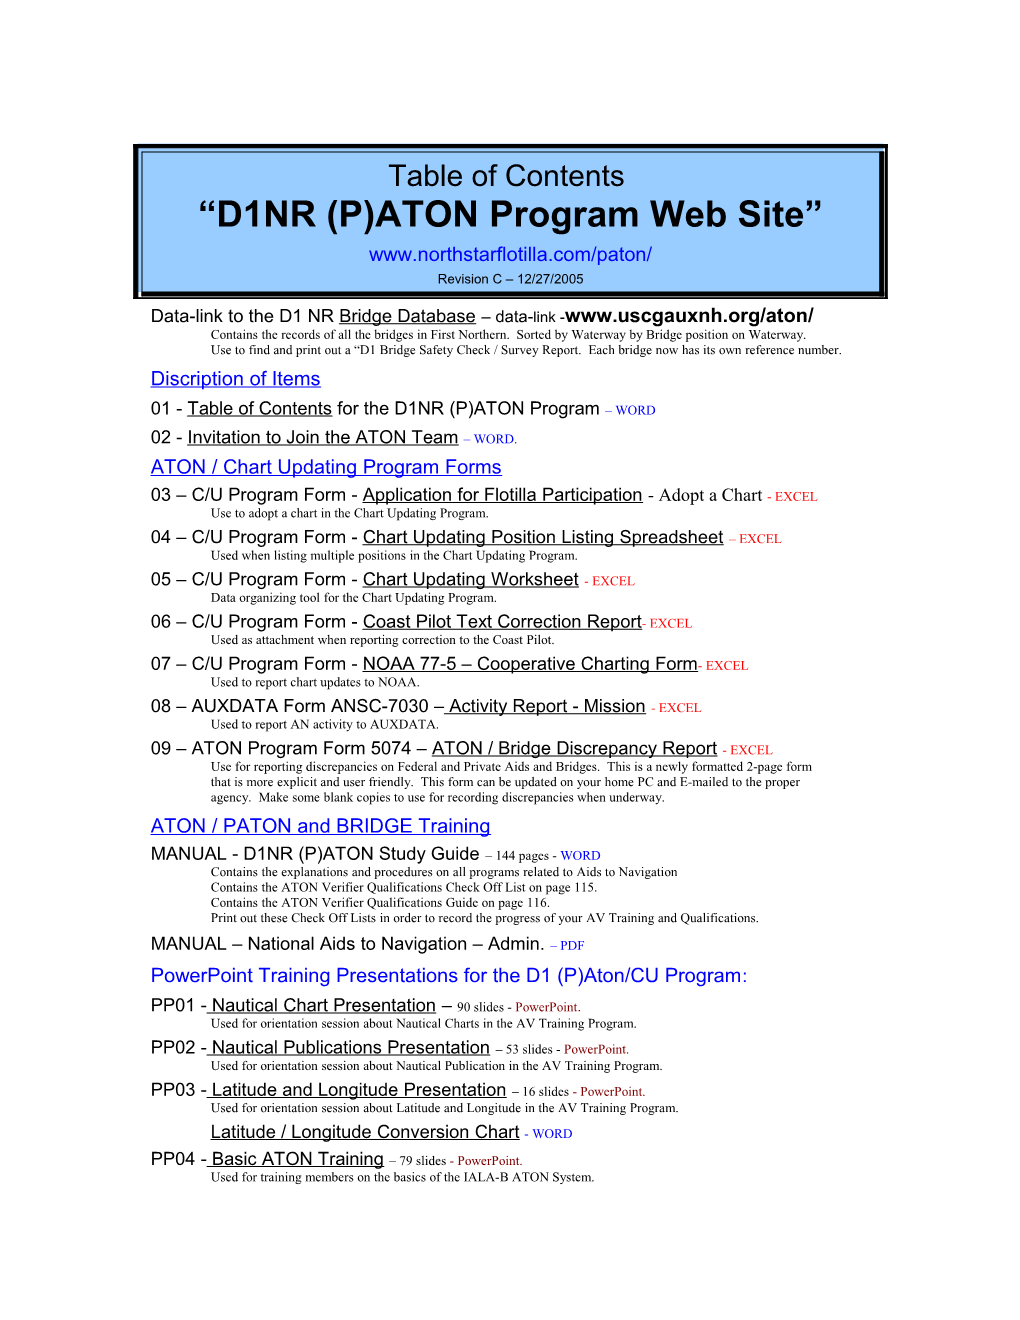 D1 (P)ATON Program CD